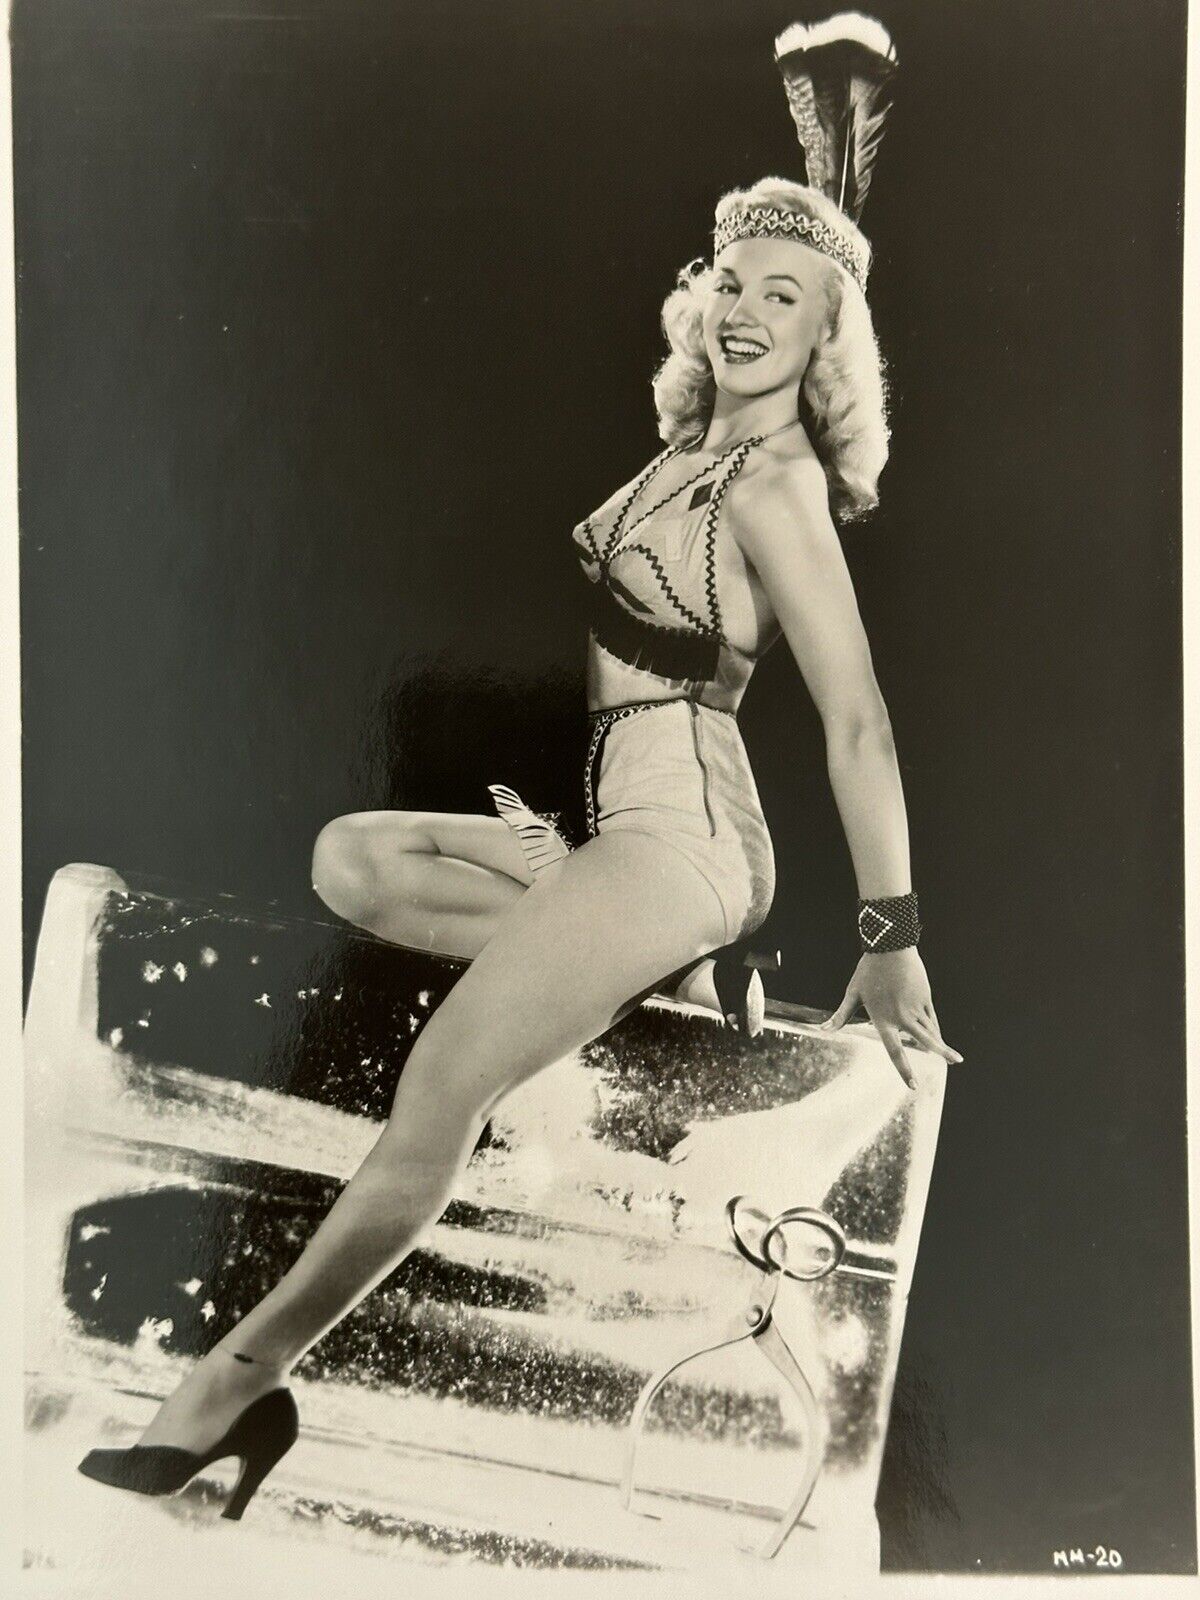 Original 1950s Marilyn Monroe TYPE 1  Photograph 8X10 - Show Girl Babes On Ice